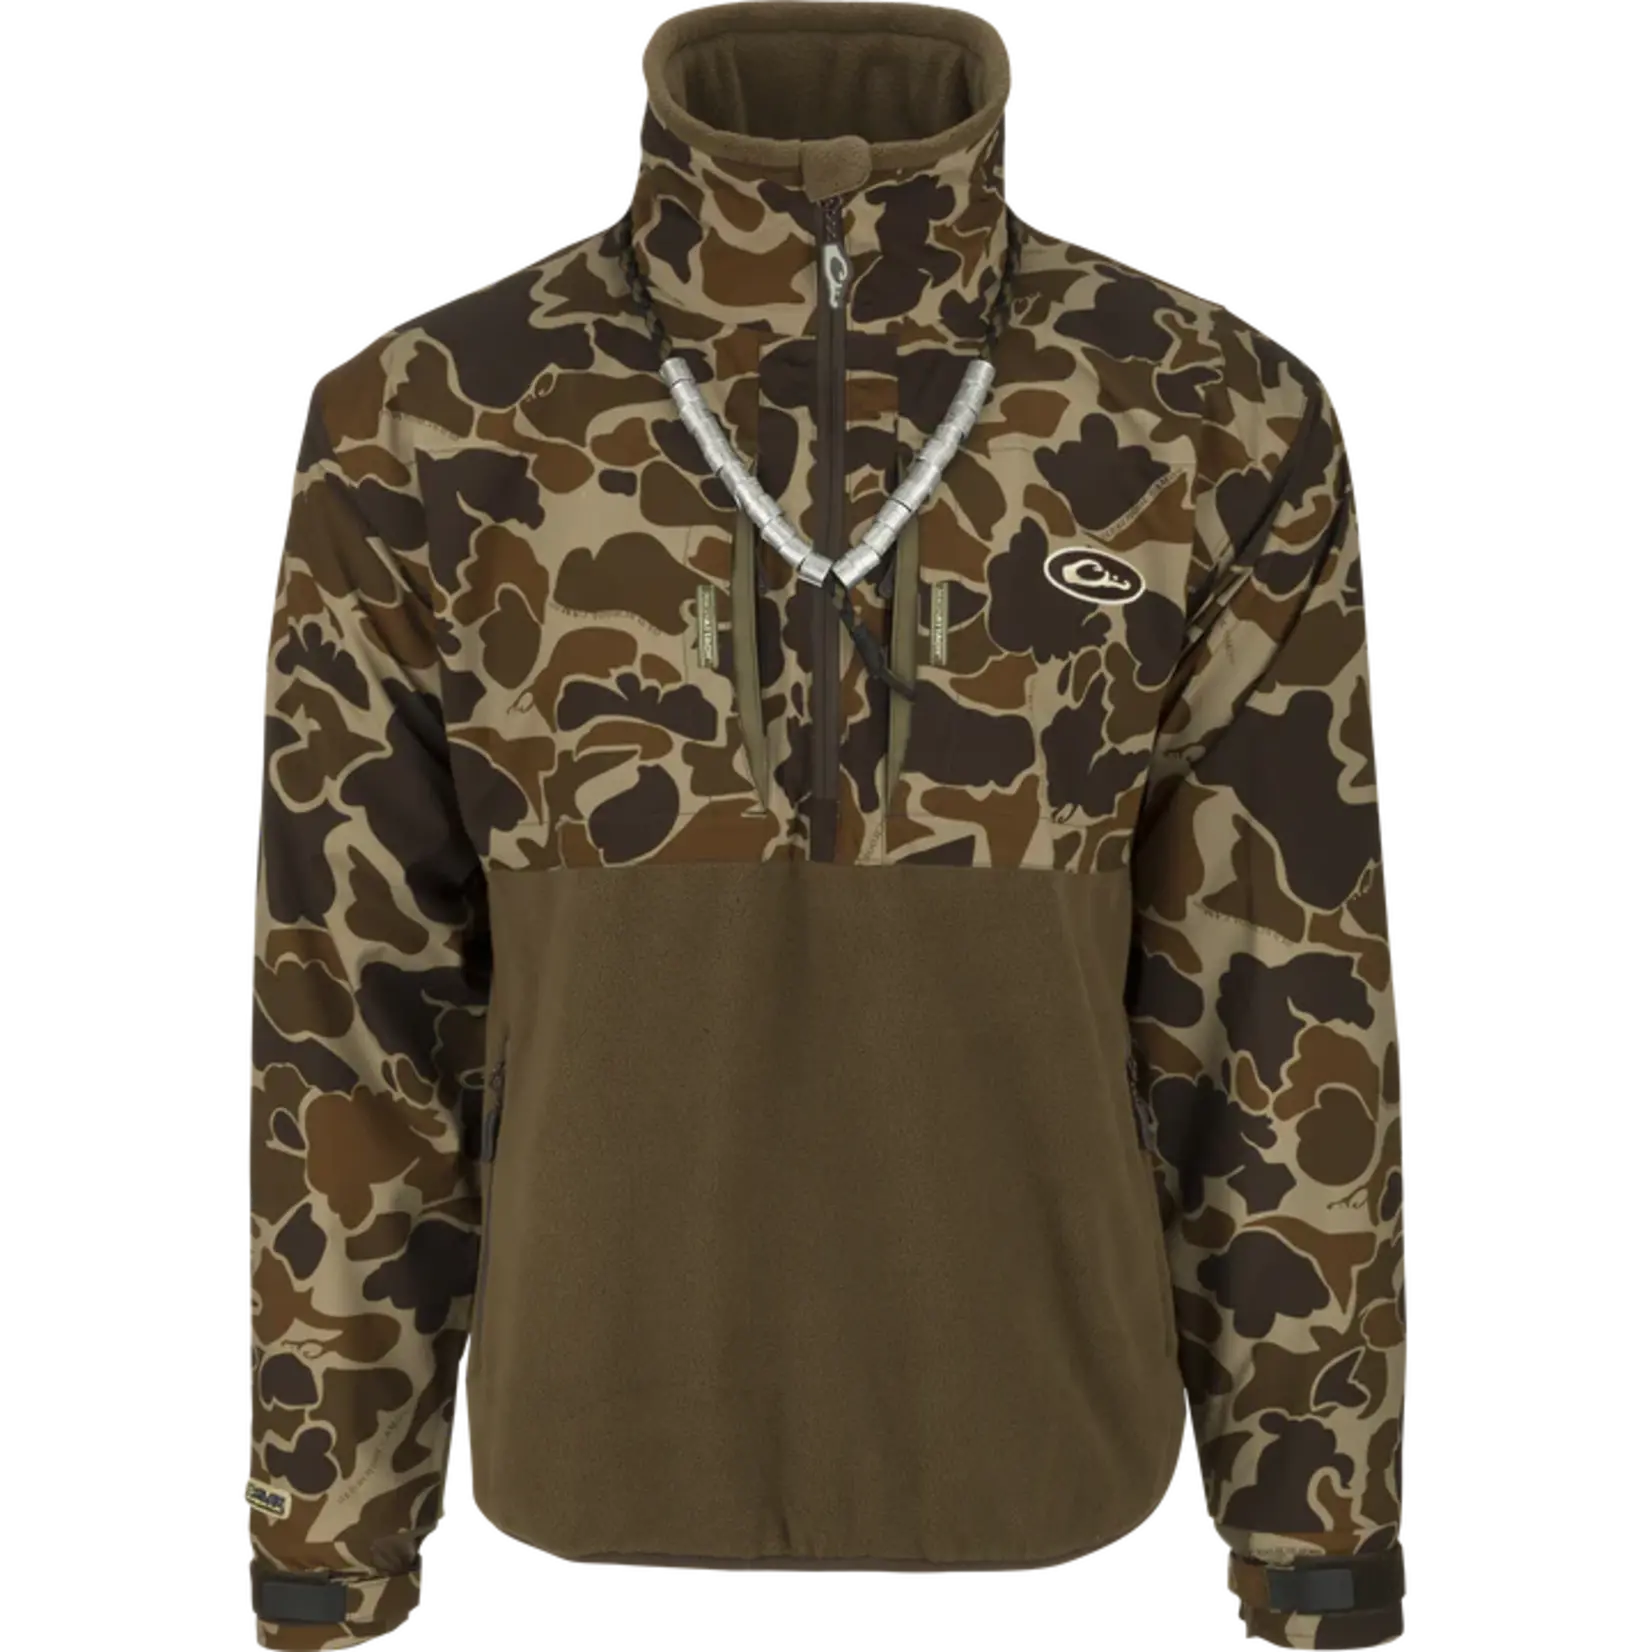 Drake MST Guardian Eqwader Flex Fleece 1/4 Zip Jacket